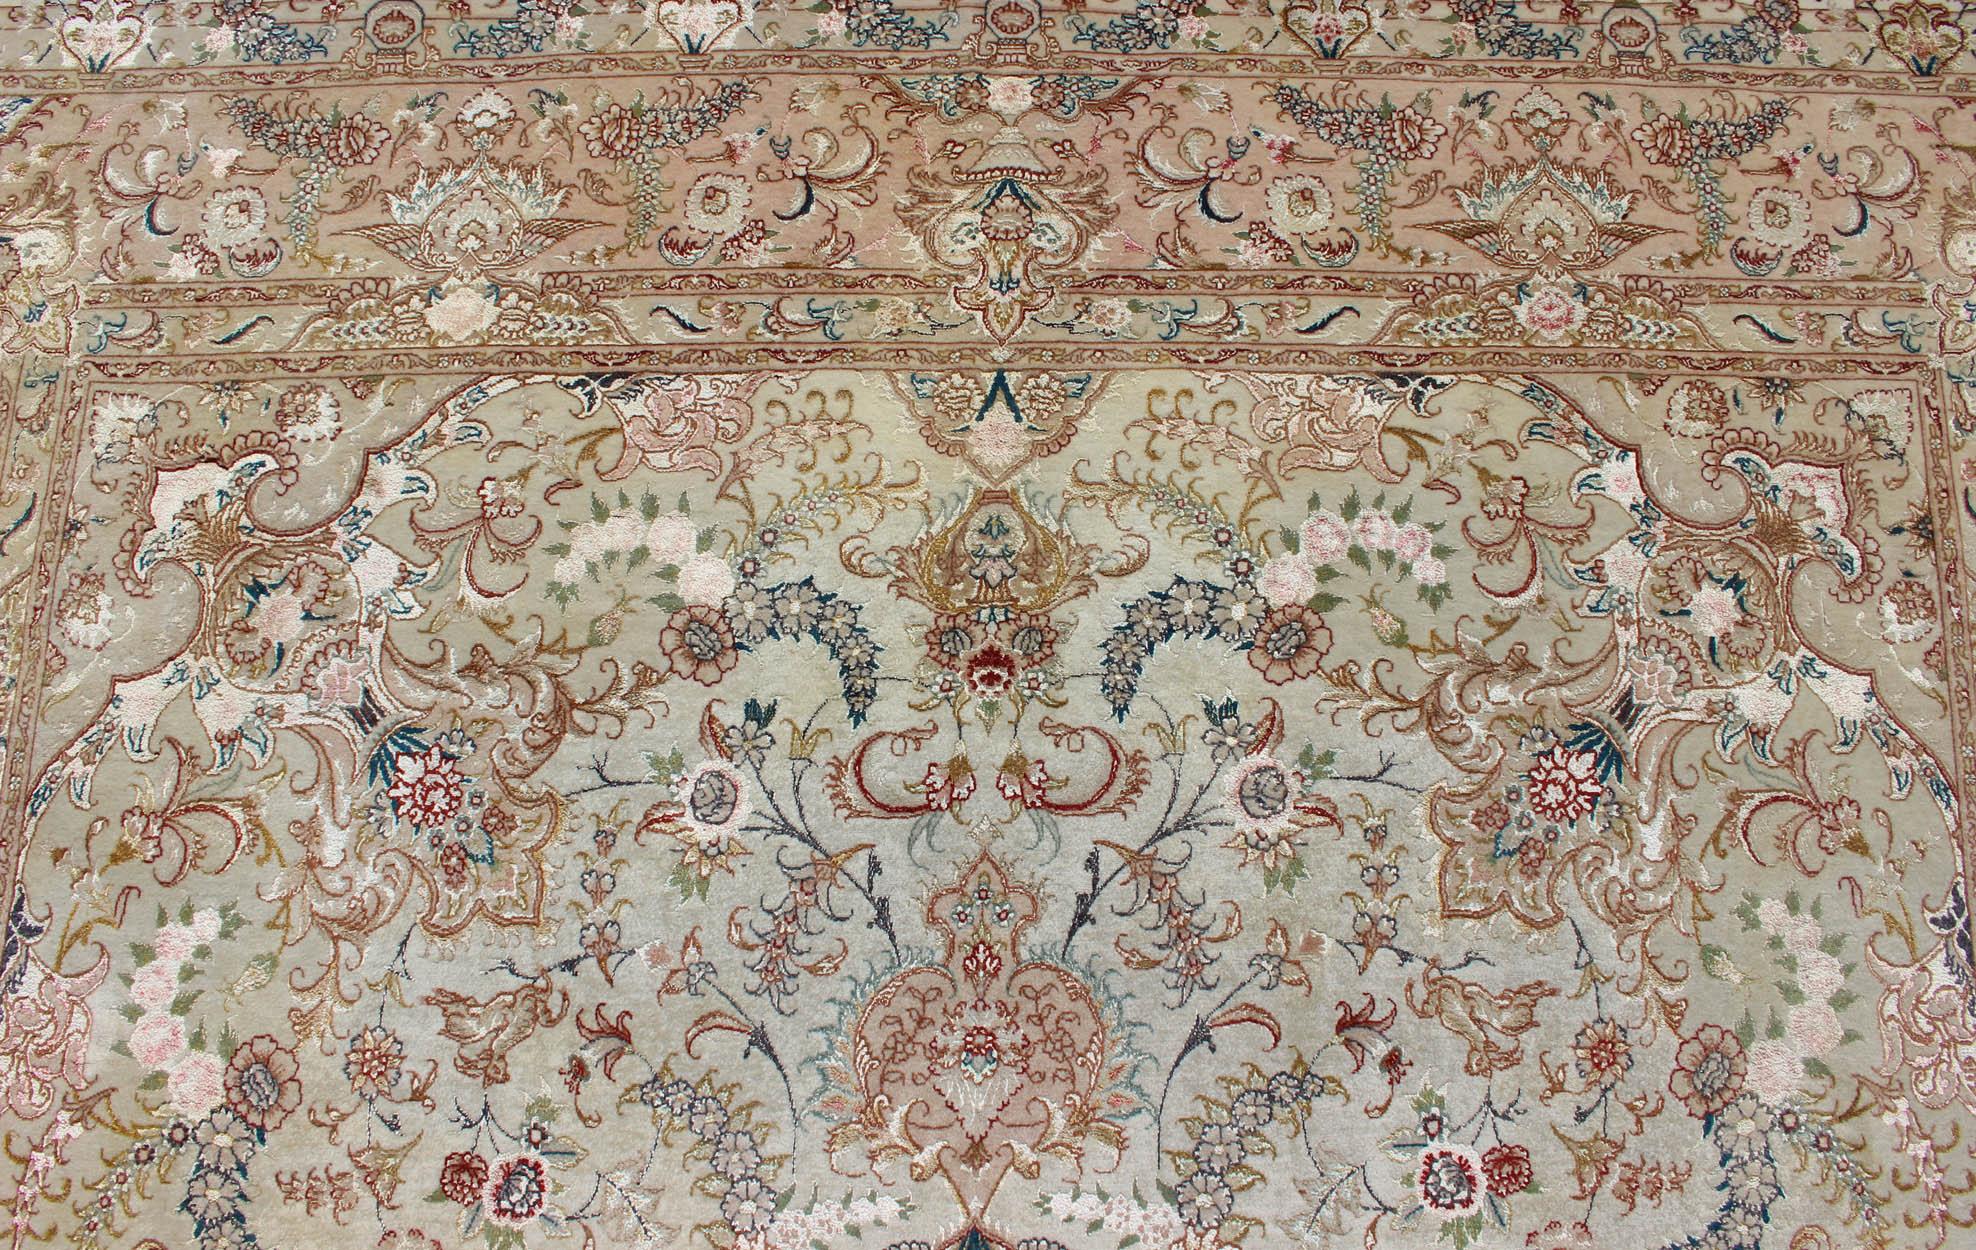 Wool Ornate and Refined Vintage Persian Fine Tabriz Rug with Floral Medallion Design